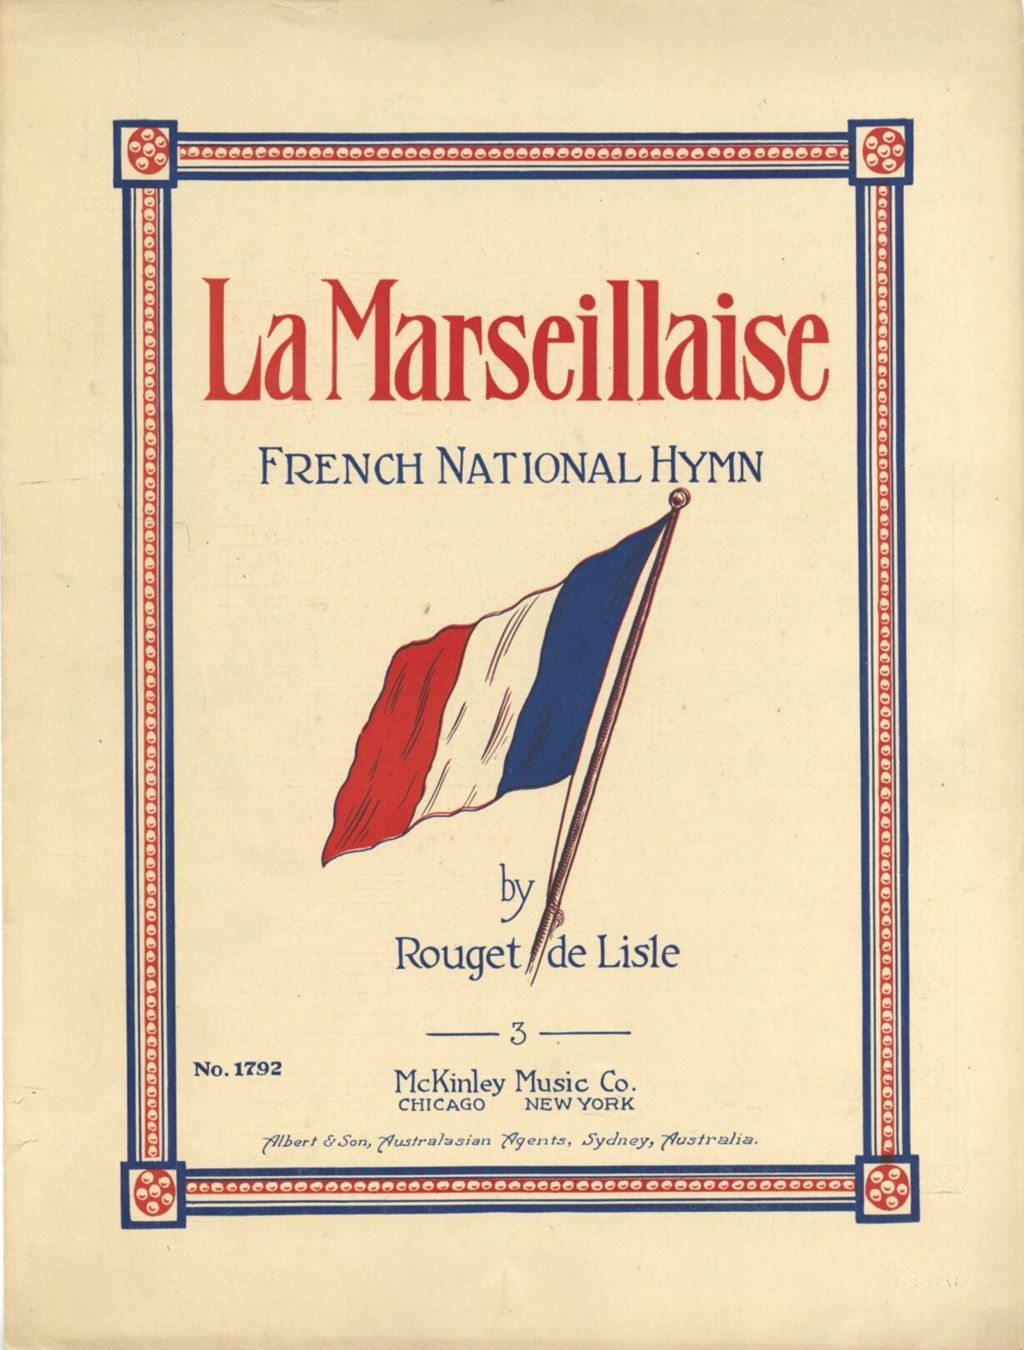 Miniature of La Marseillaise (French National Hymn)